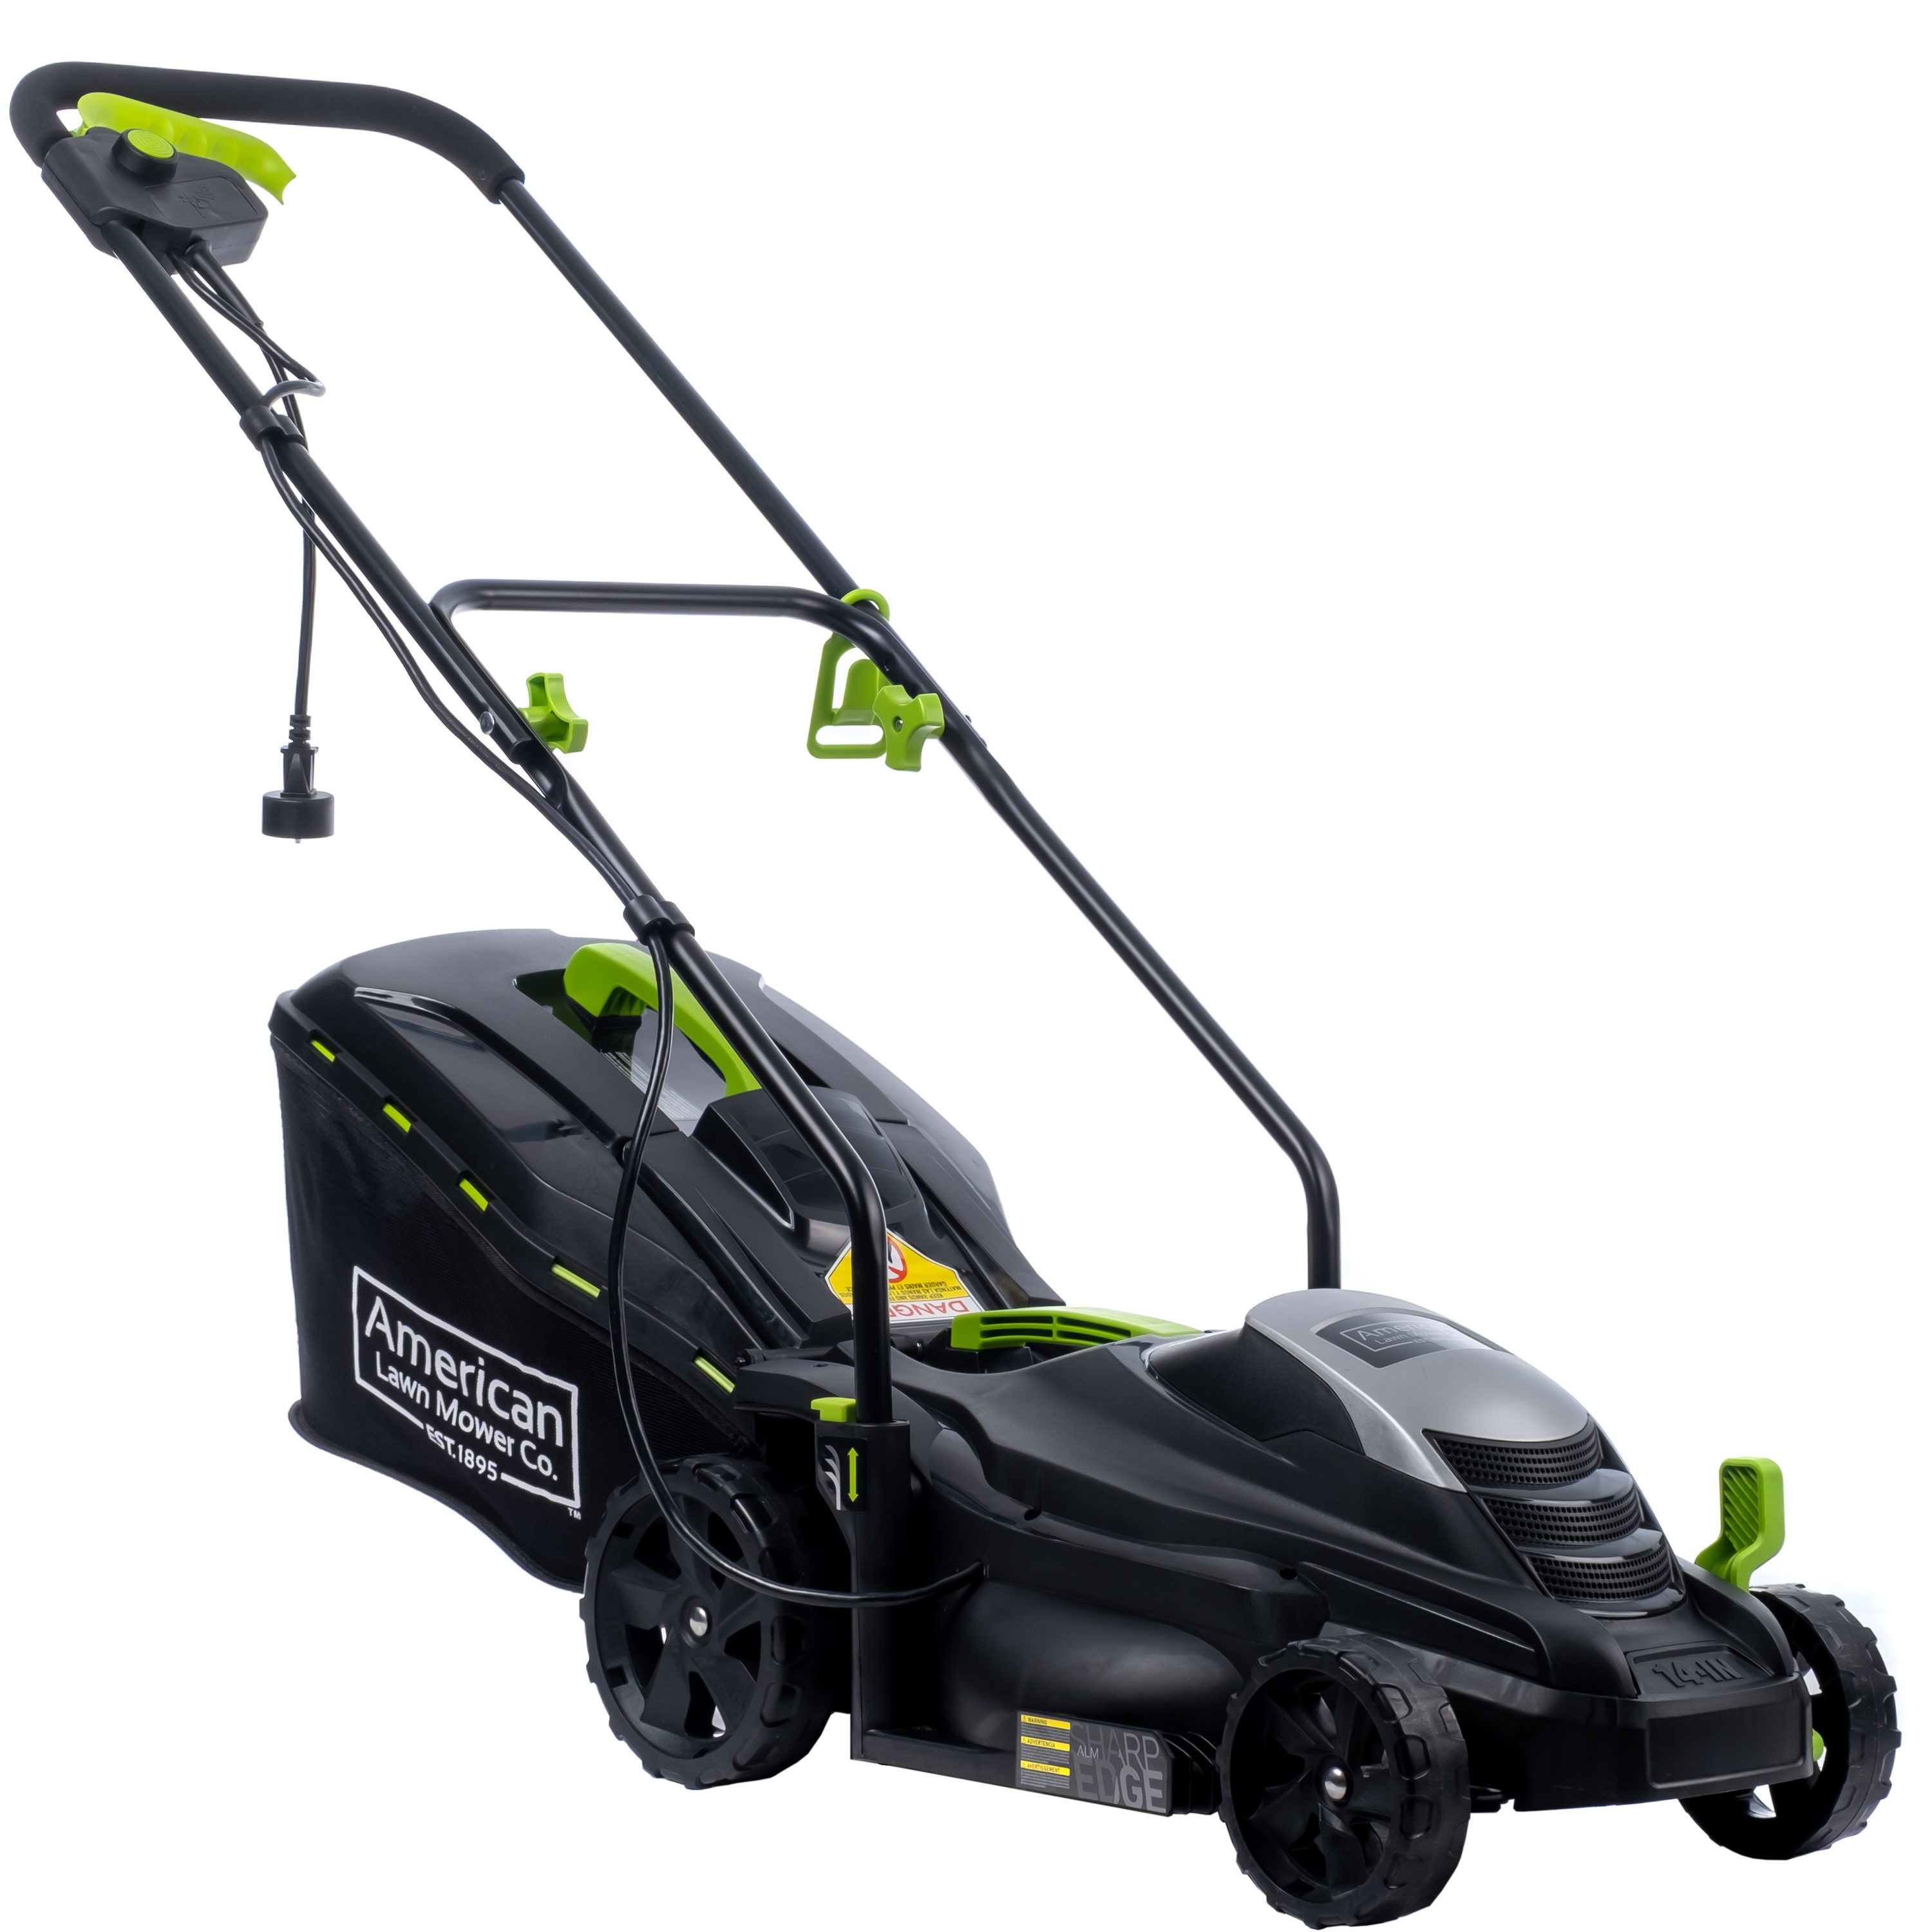 Black+decker BESTA512CM Electric Lawn Mower